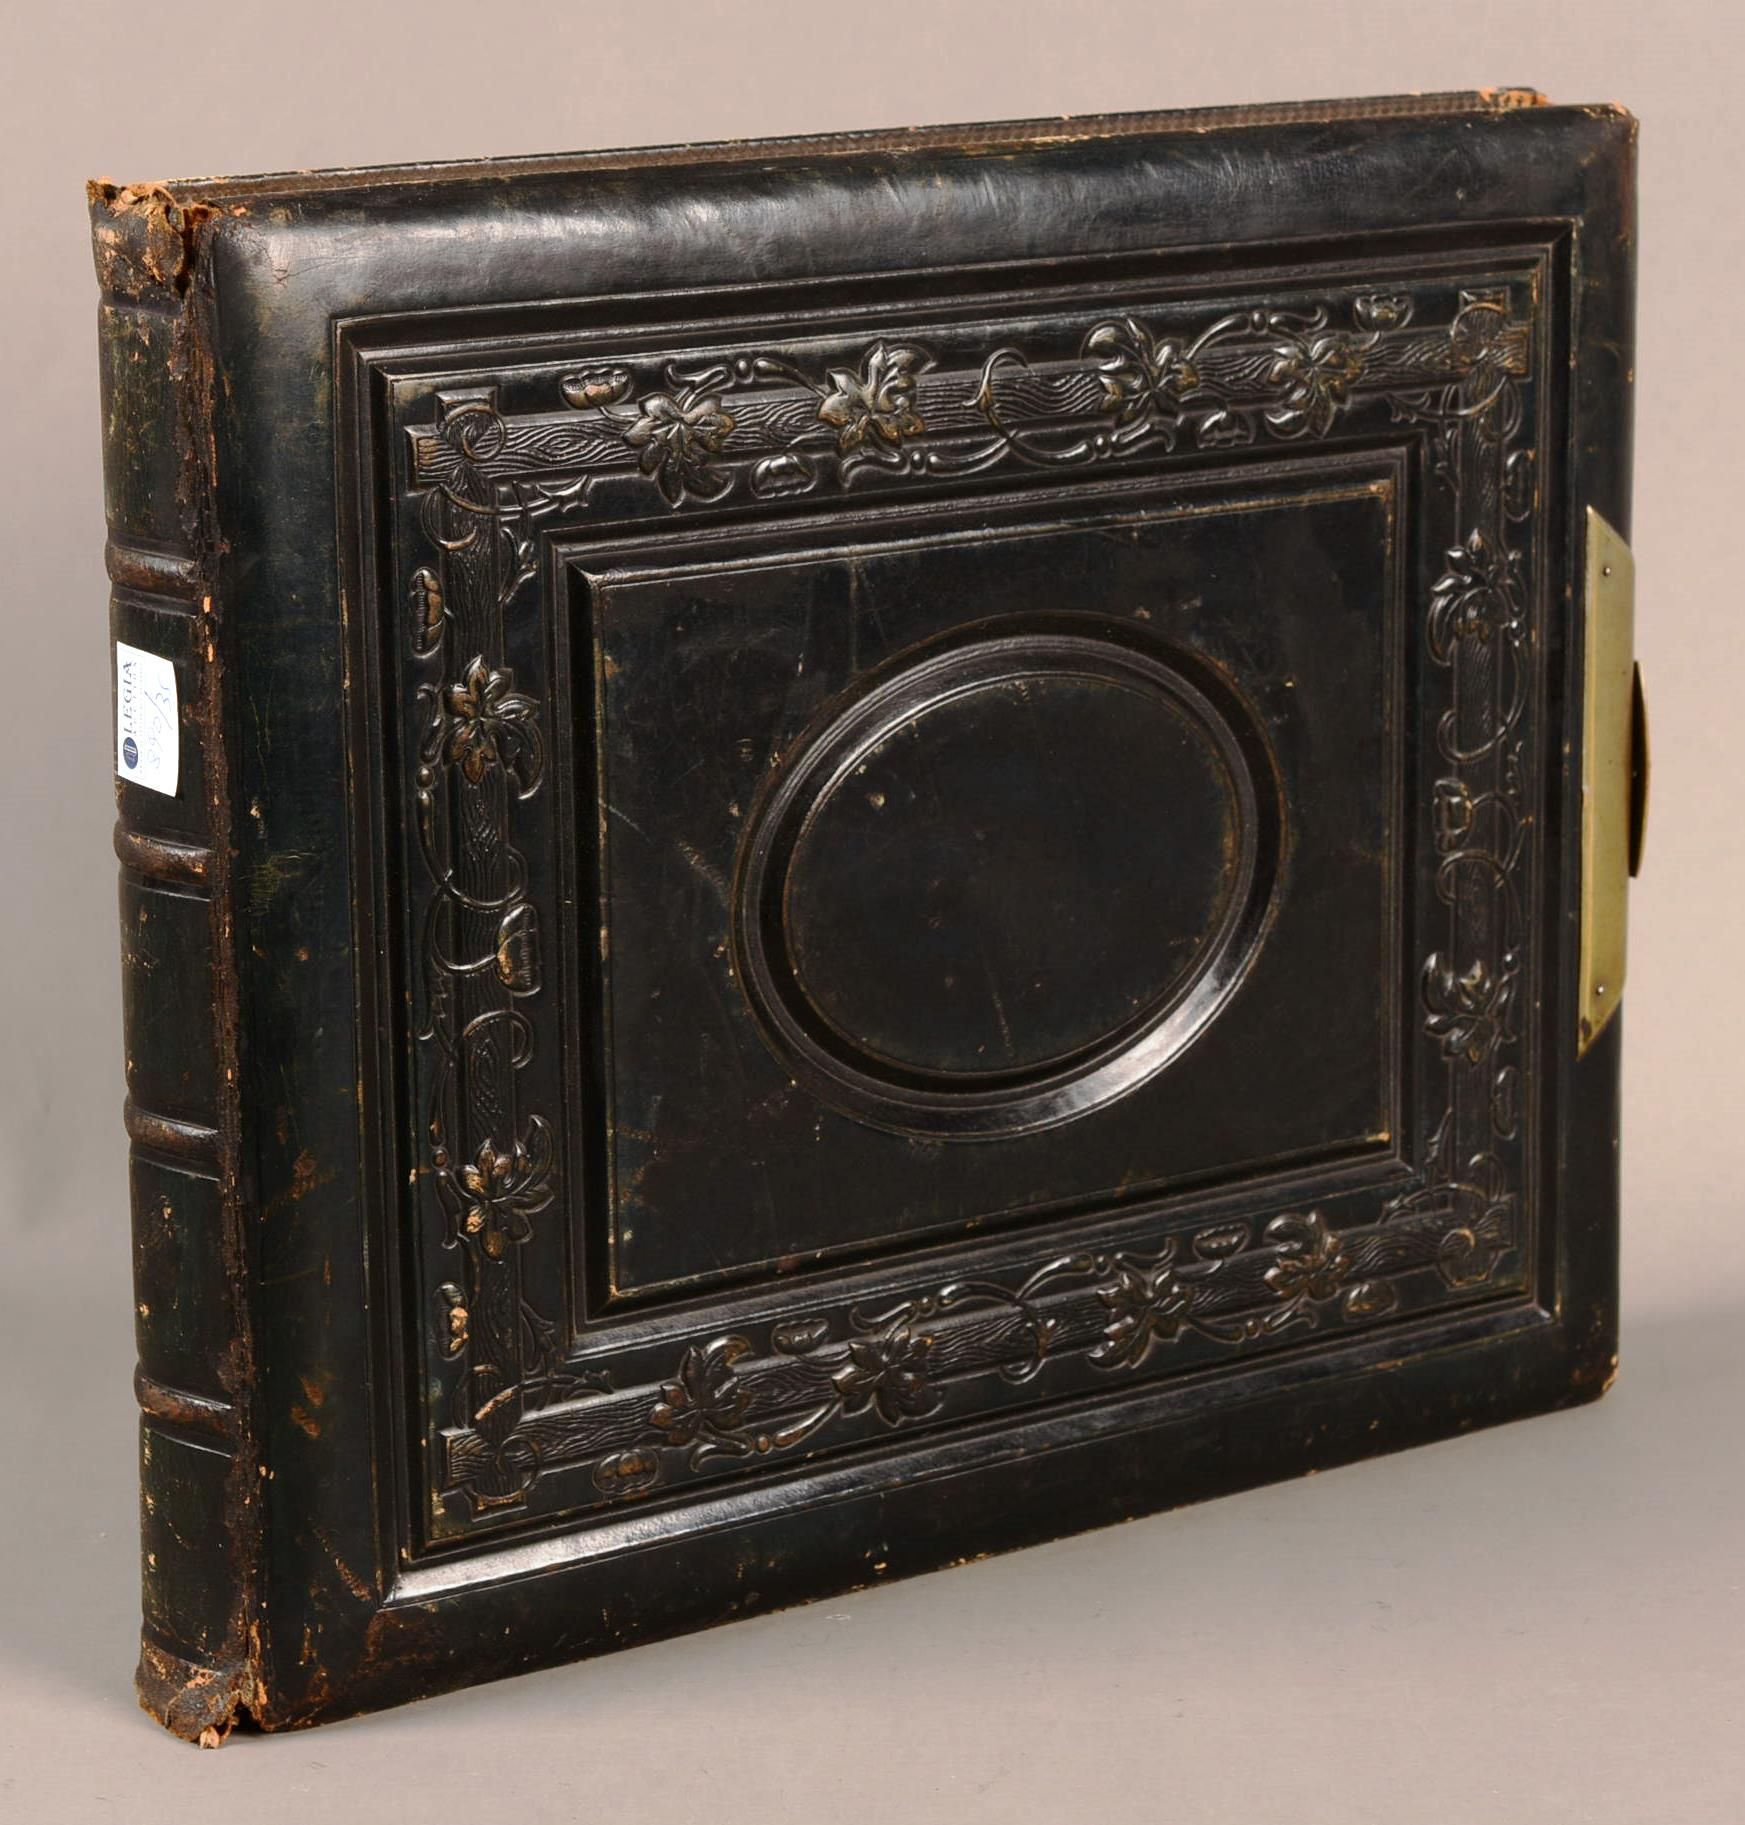 Album de photographies Album of photographs in embossed cardboard circa 1900.

A&hellip;